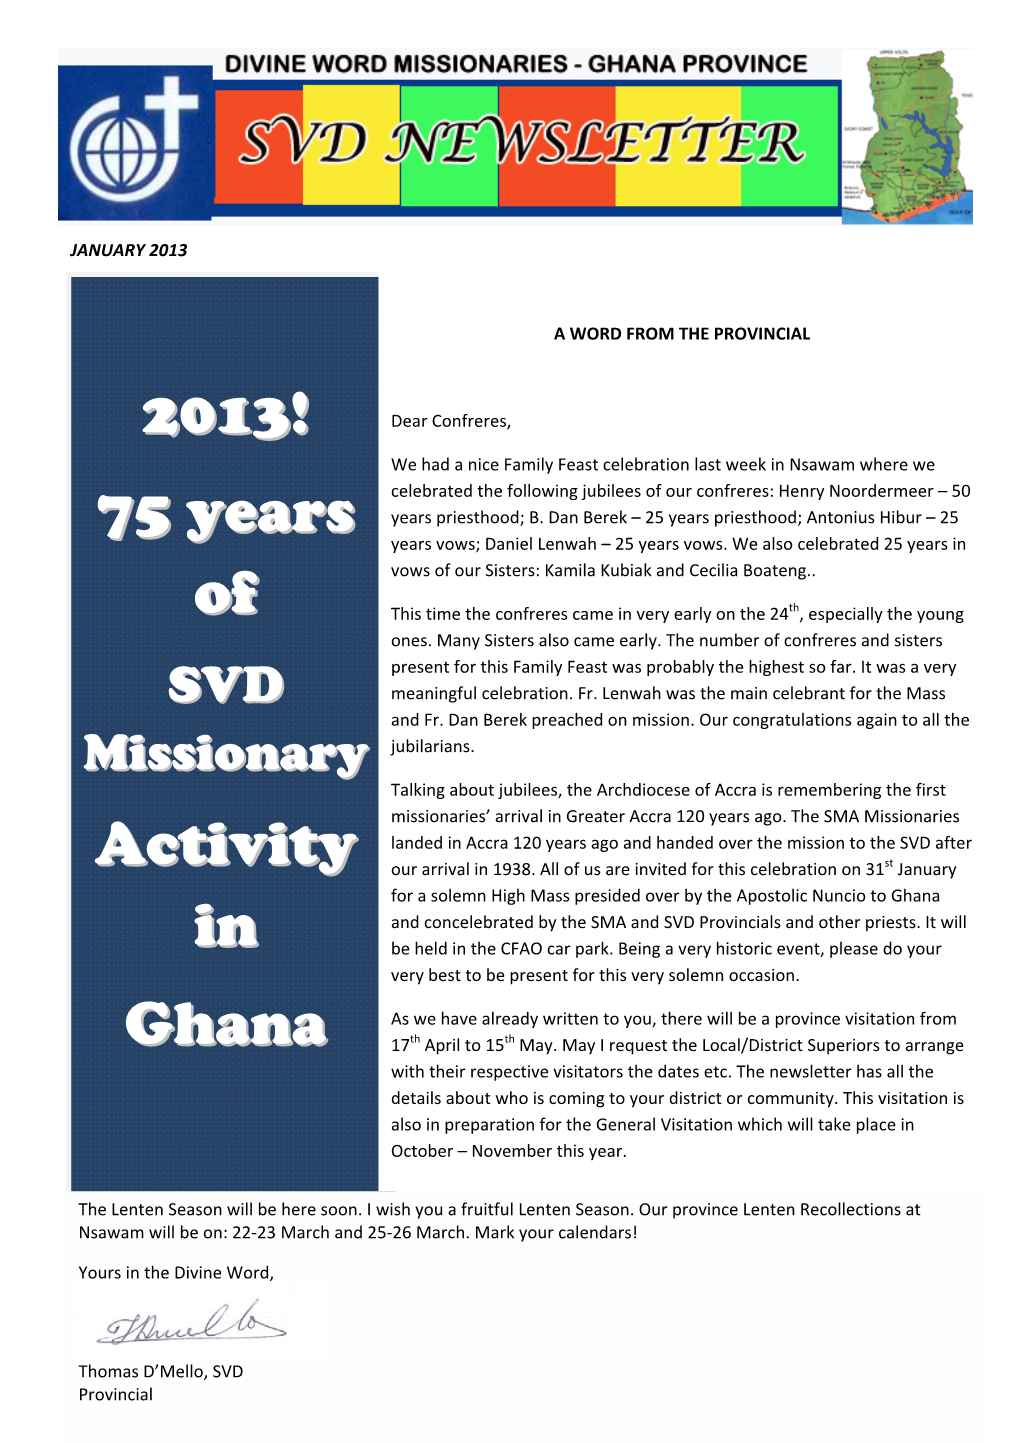 75 Years of Activity in Ghana